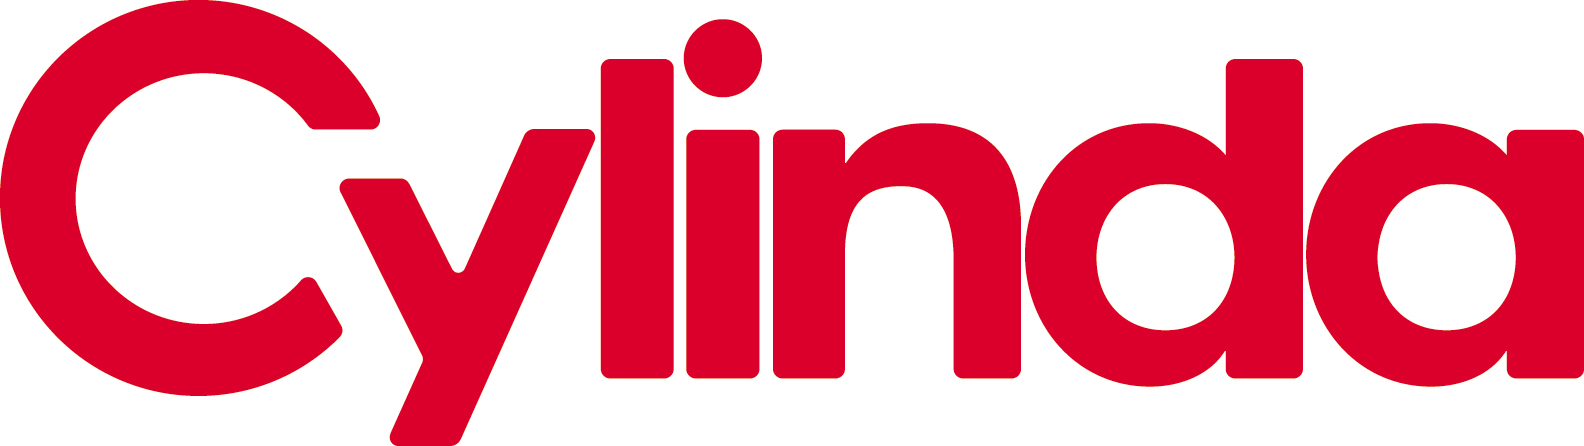 cylinda_logo